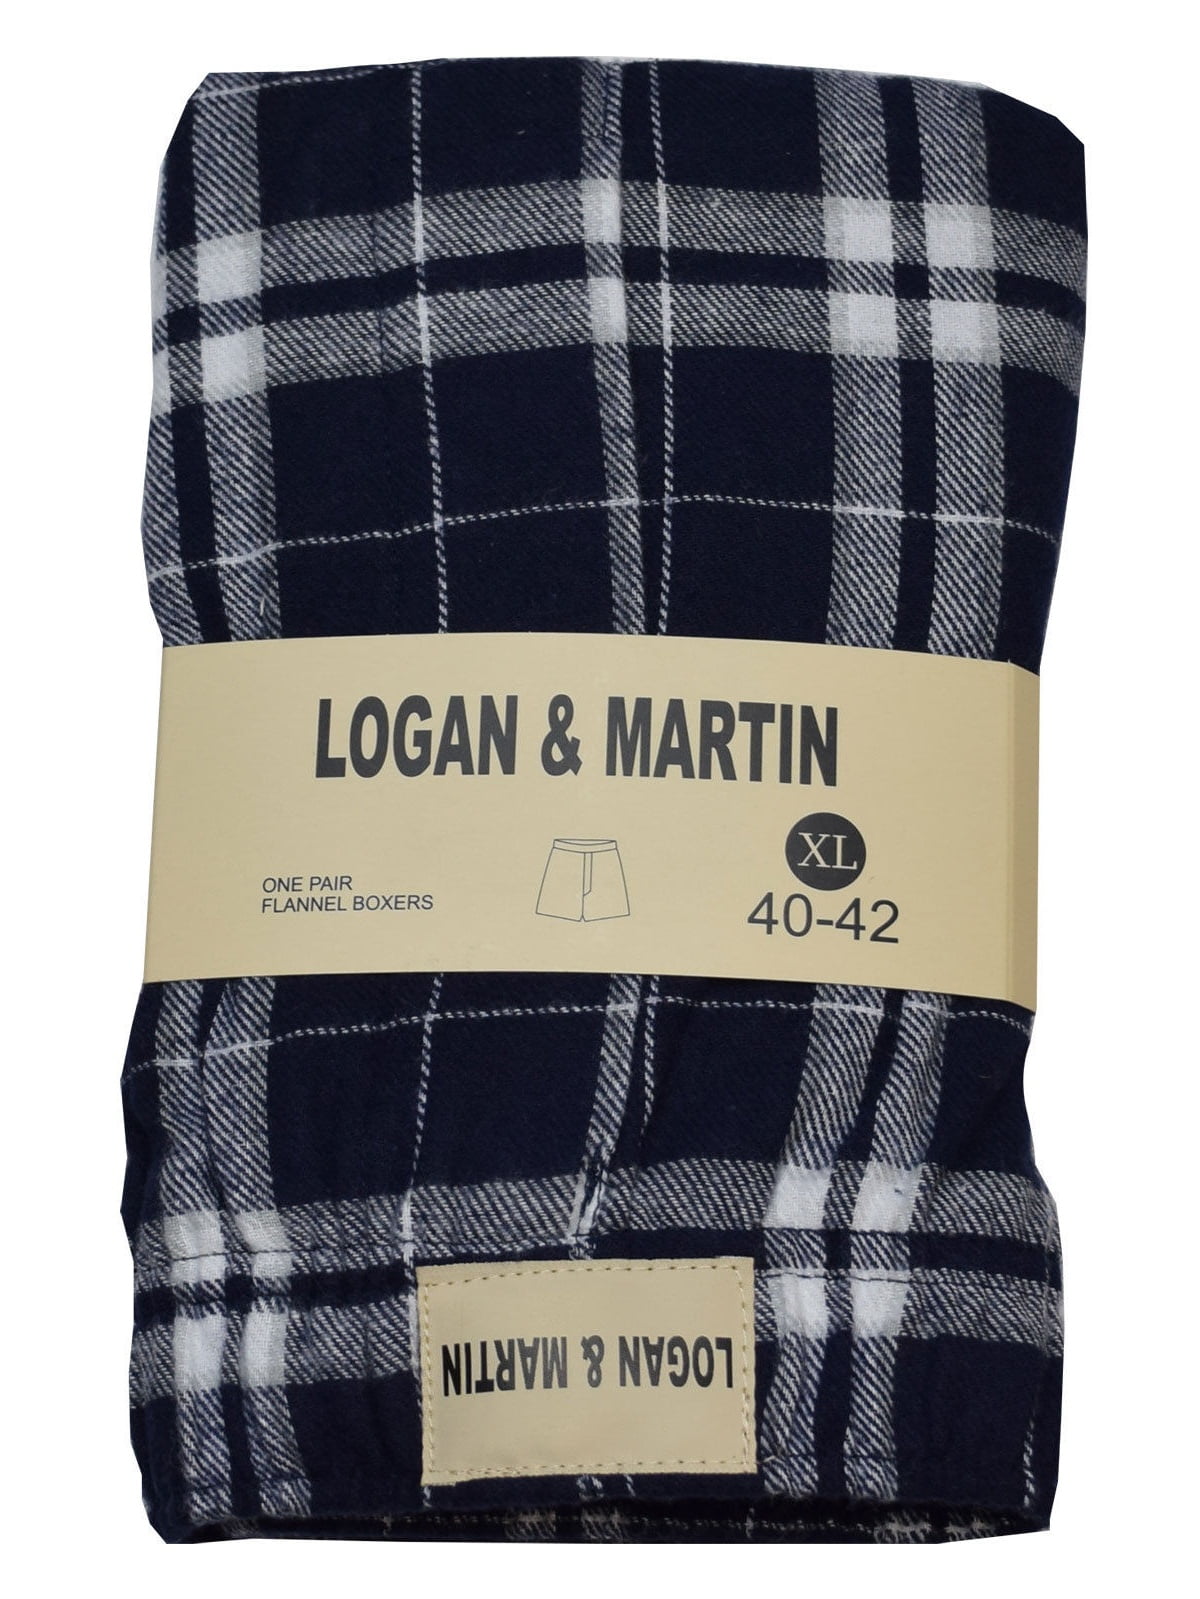 LOGAN & MARTIN MEN'S 100% Cotton FLANNEL BOXERS IN 10 COLORS/STYLES ...